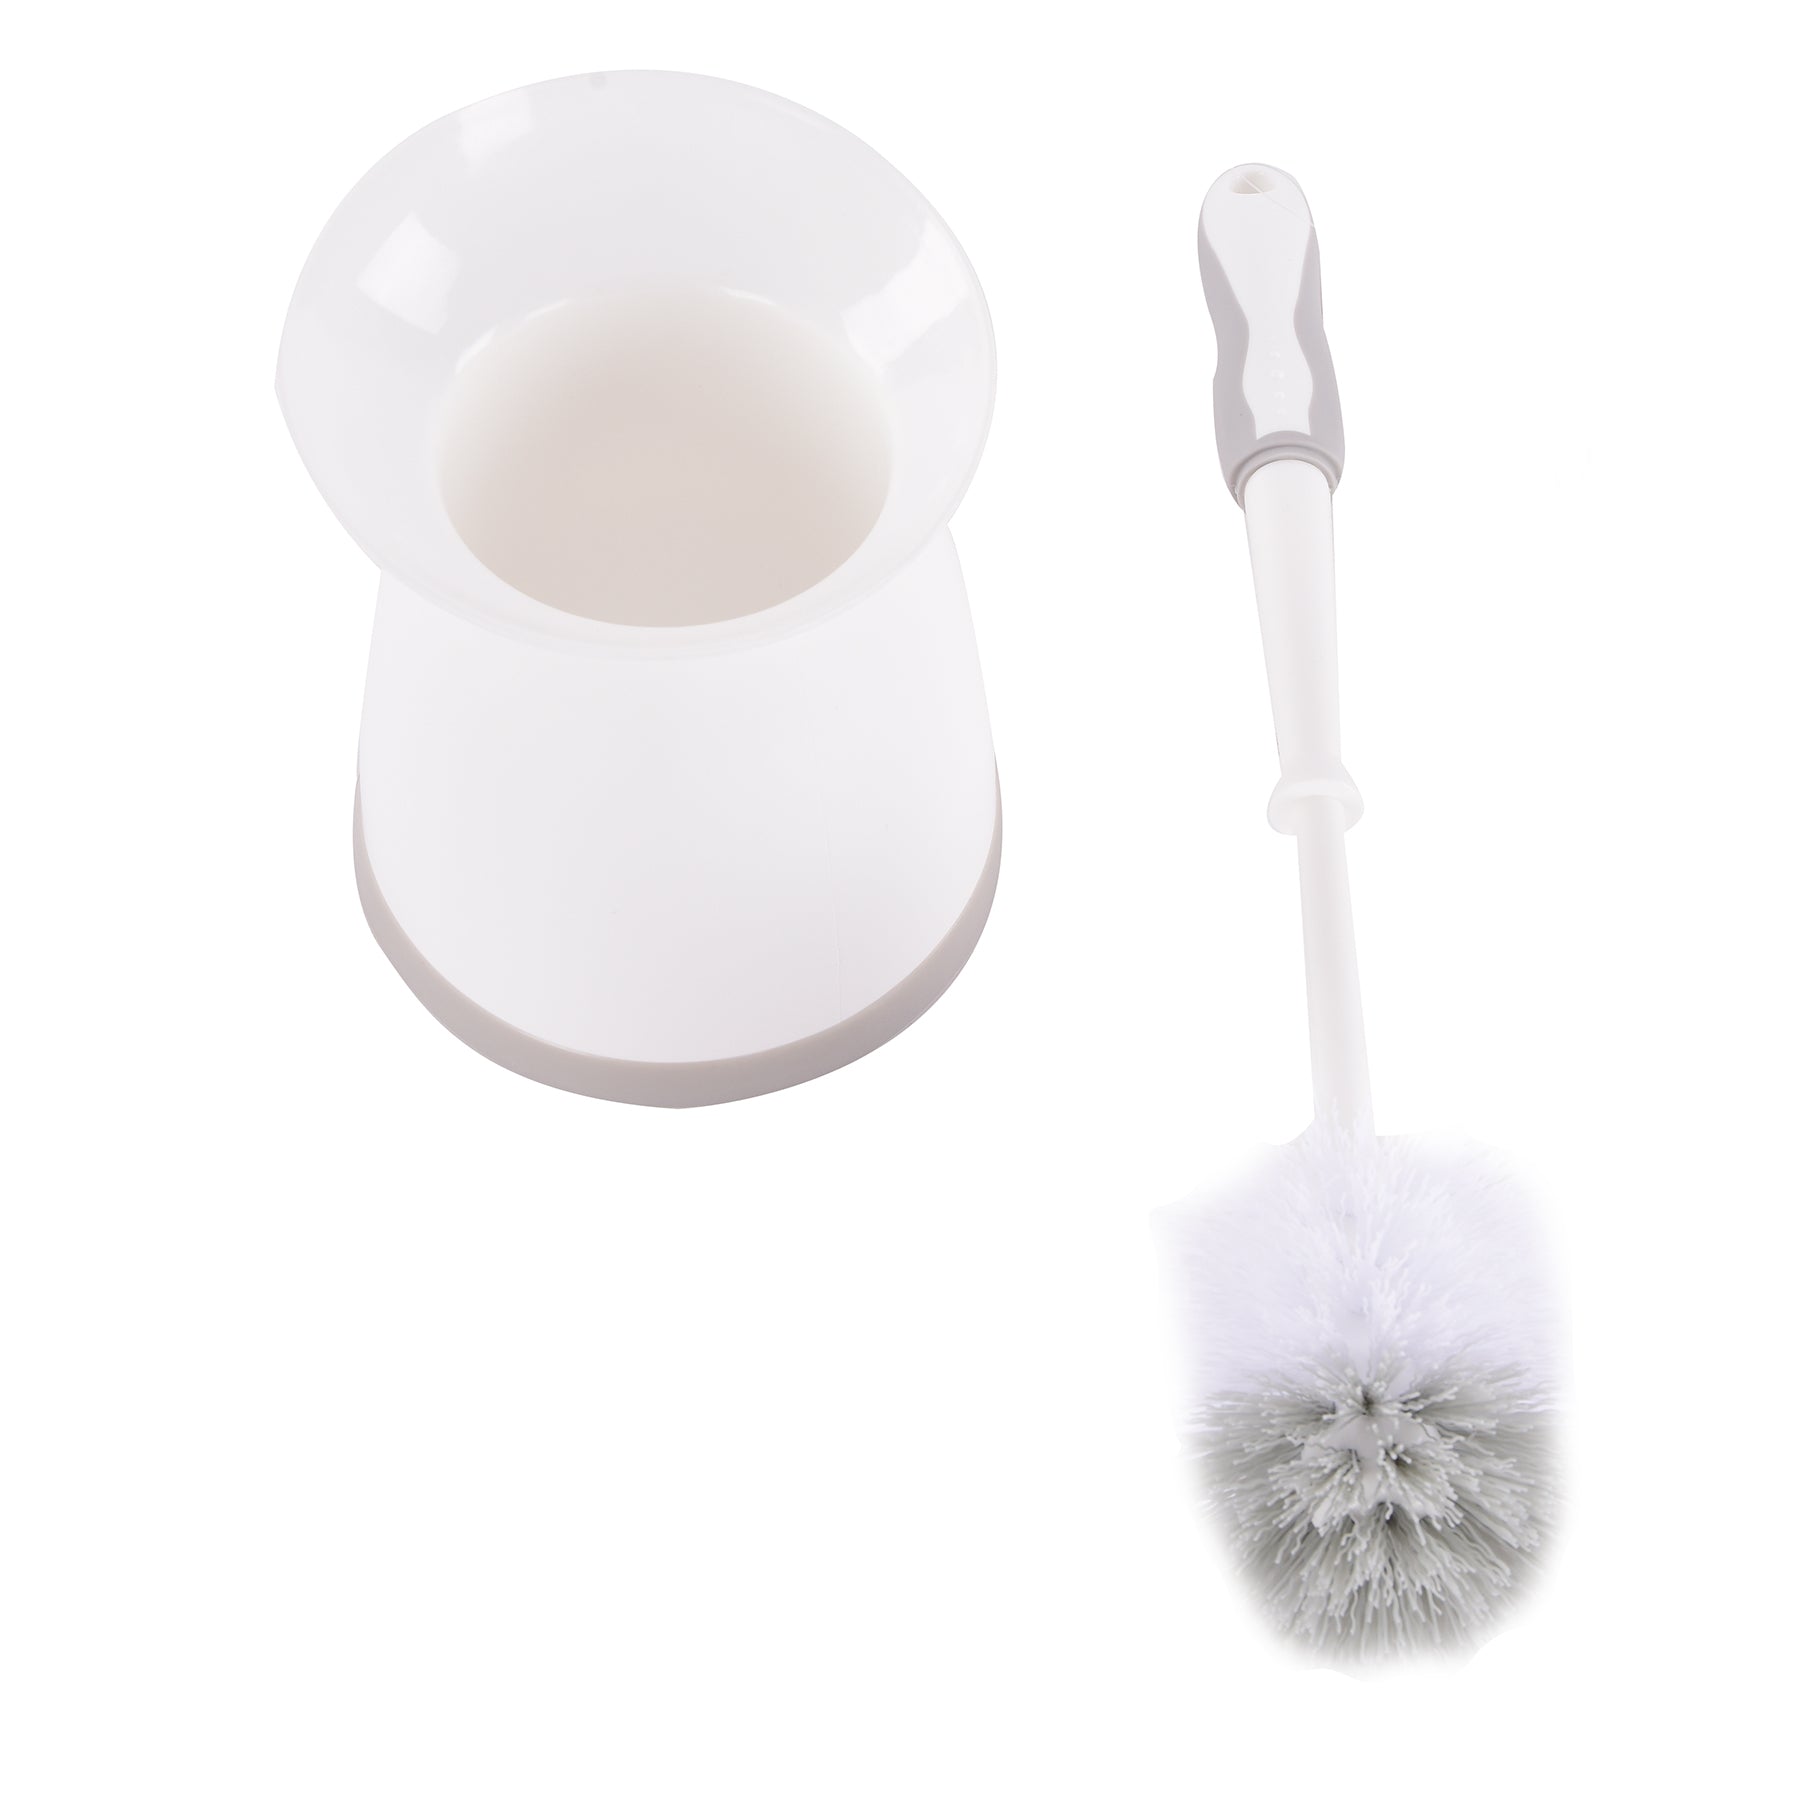 Toilet brush with holder, White & Grey